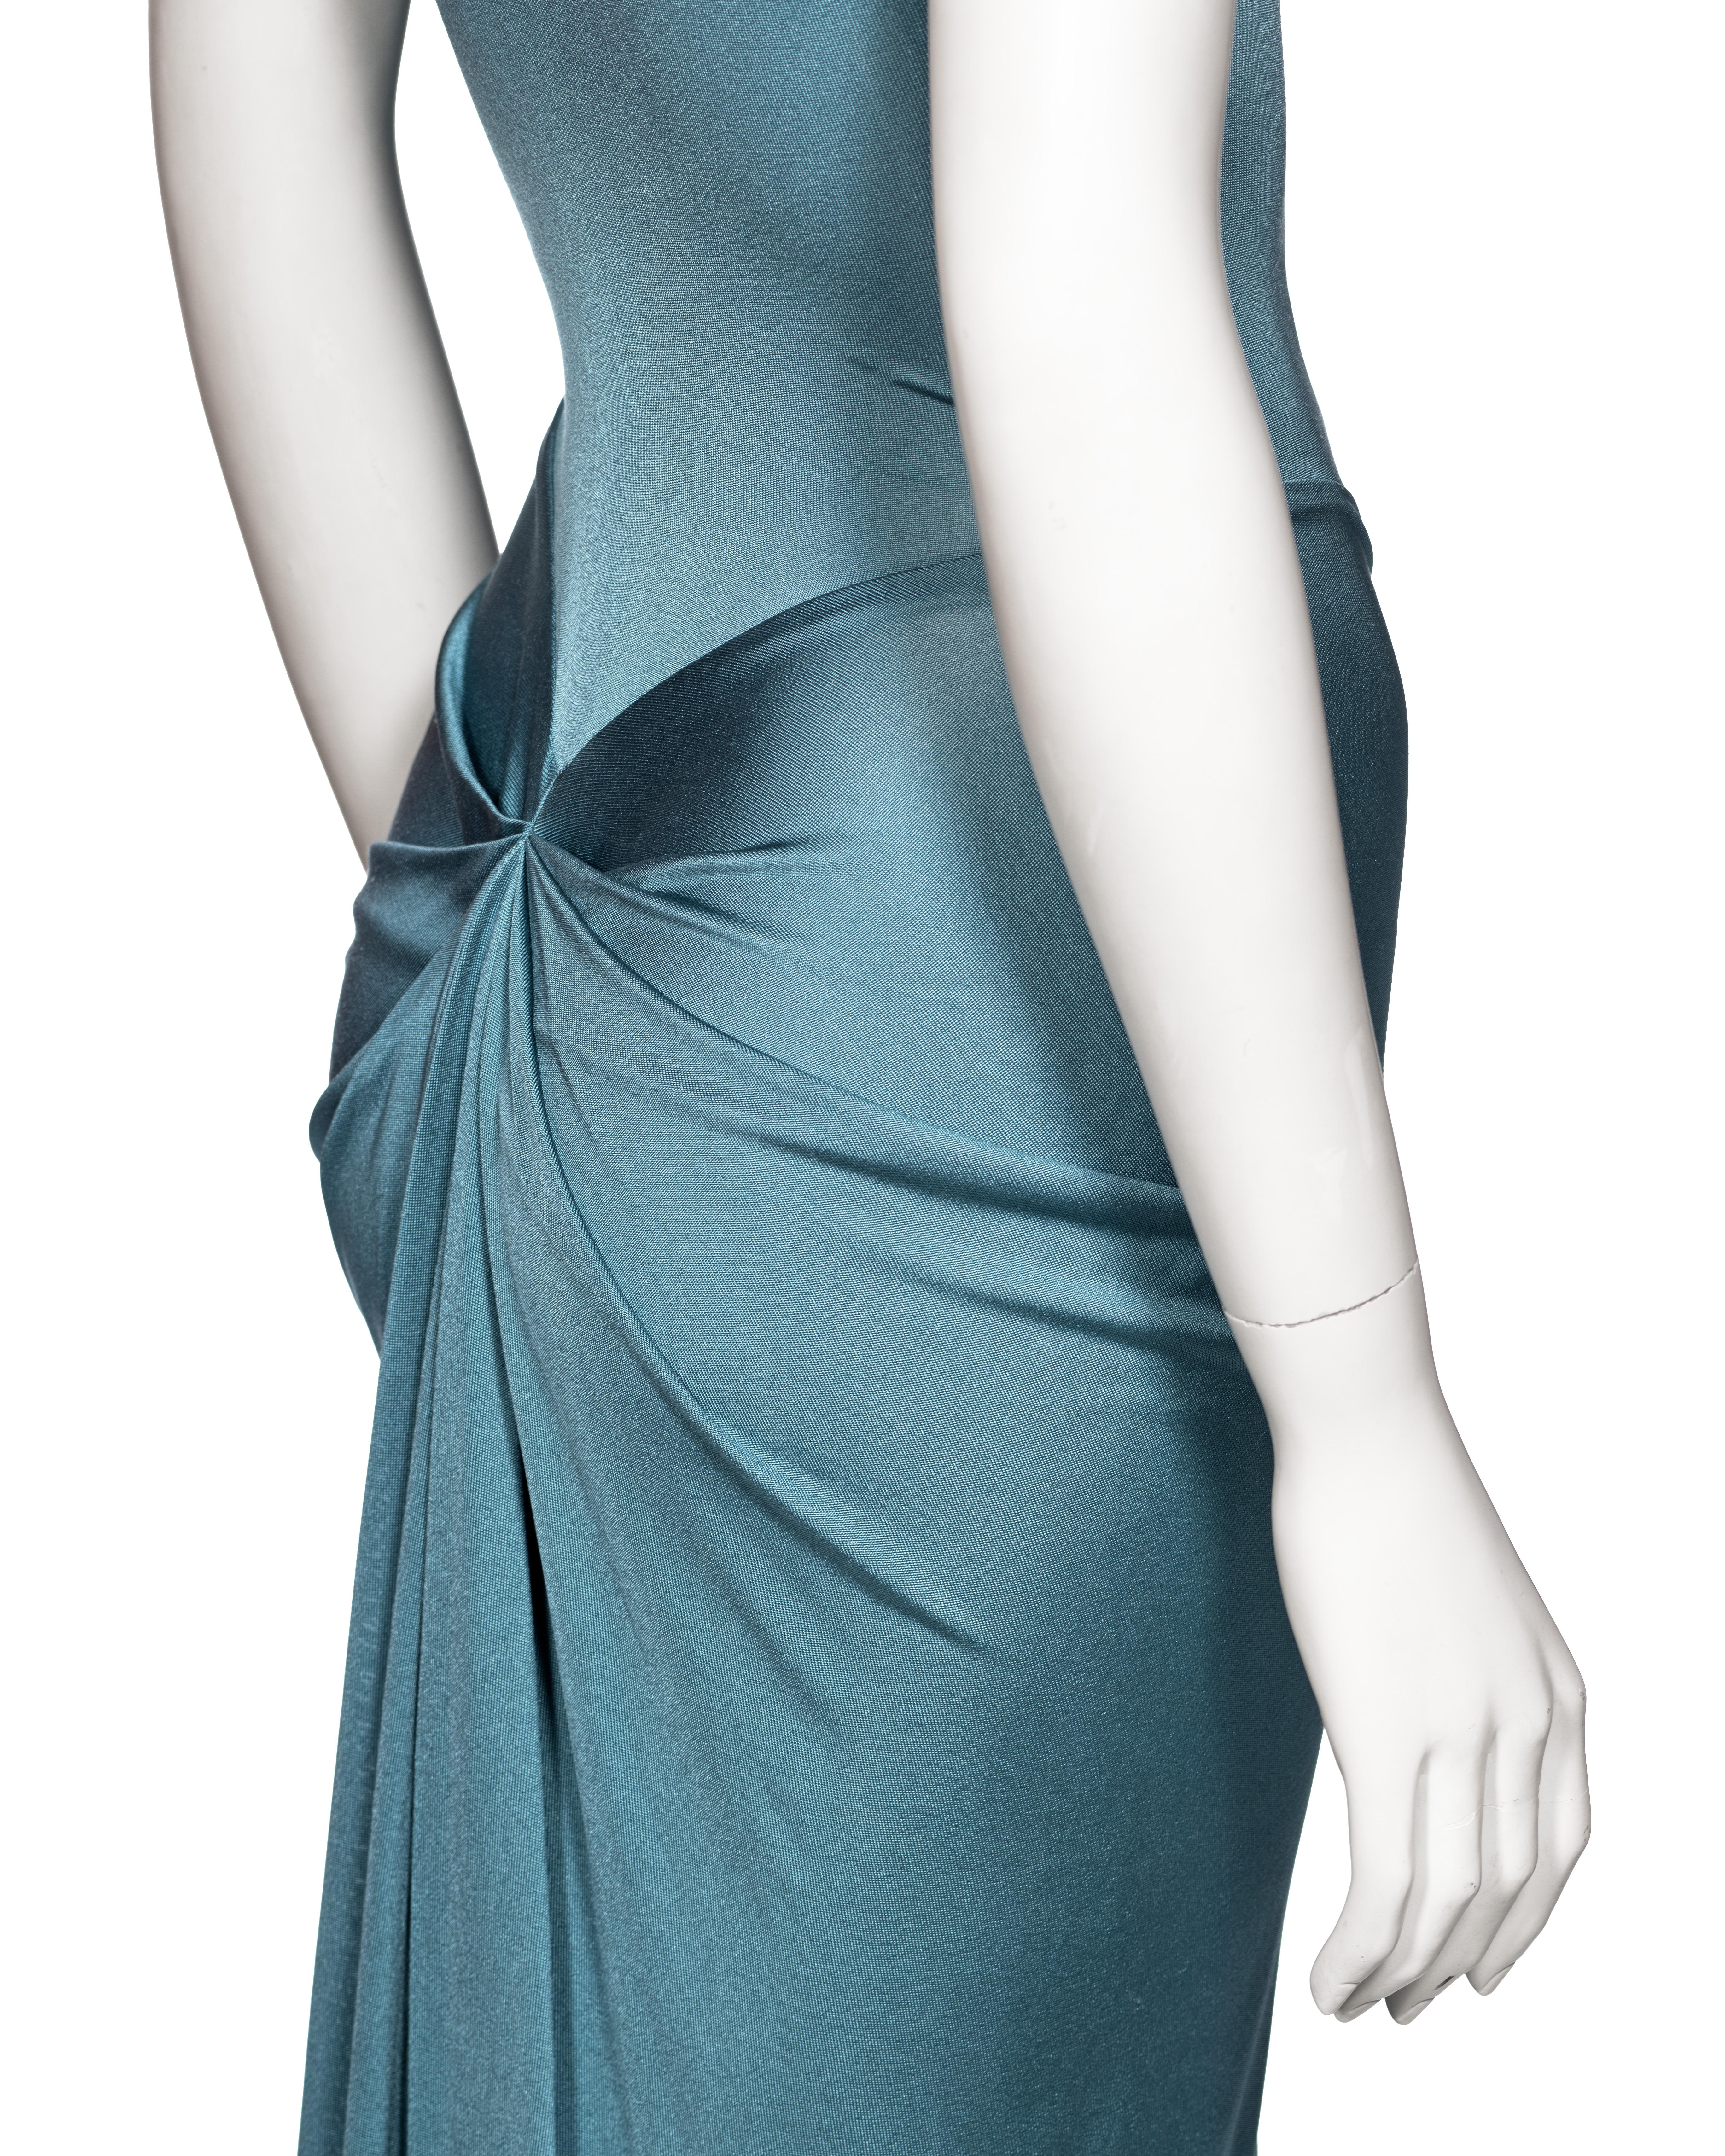 Christian Dior by John Galliano Powder Blue Silk Jersey Evening Dress, ss 2000 For Sale 3